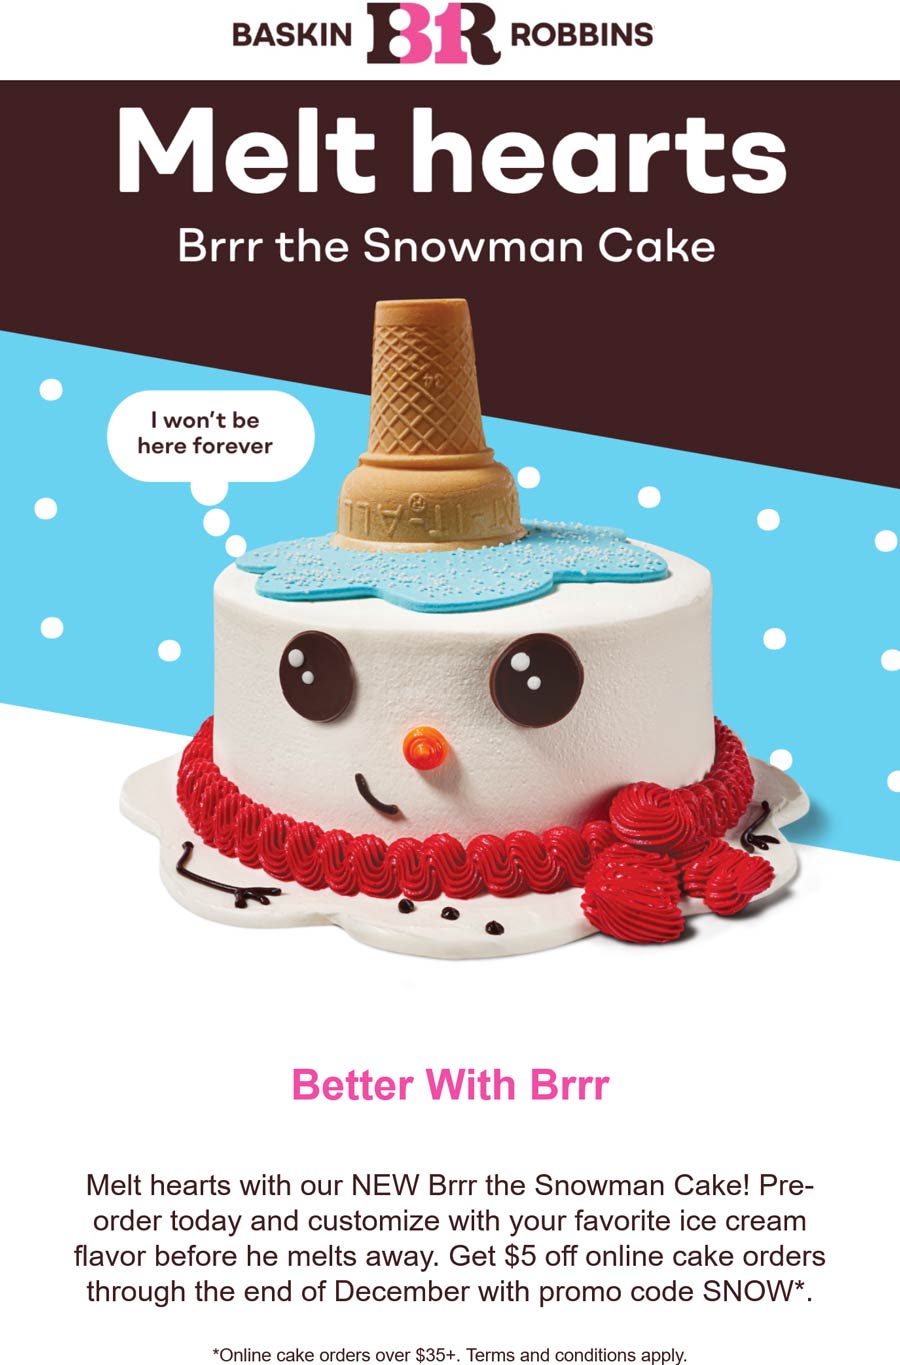 Baskin Robbins restaurants Coupon  $5 off $35+ ice cream cake orders at Baskin Robbins via promo code SNOW #baskinrobbins 